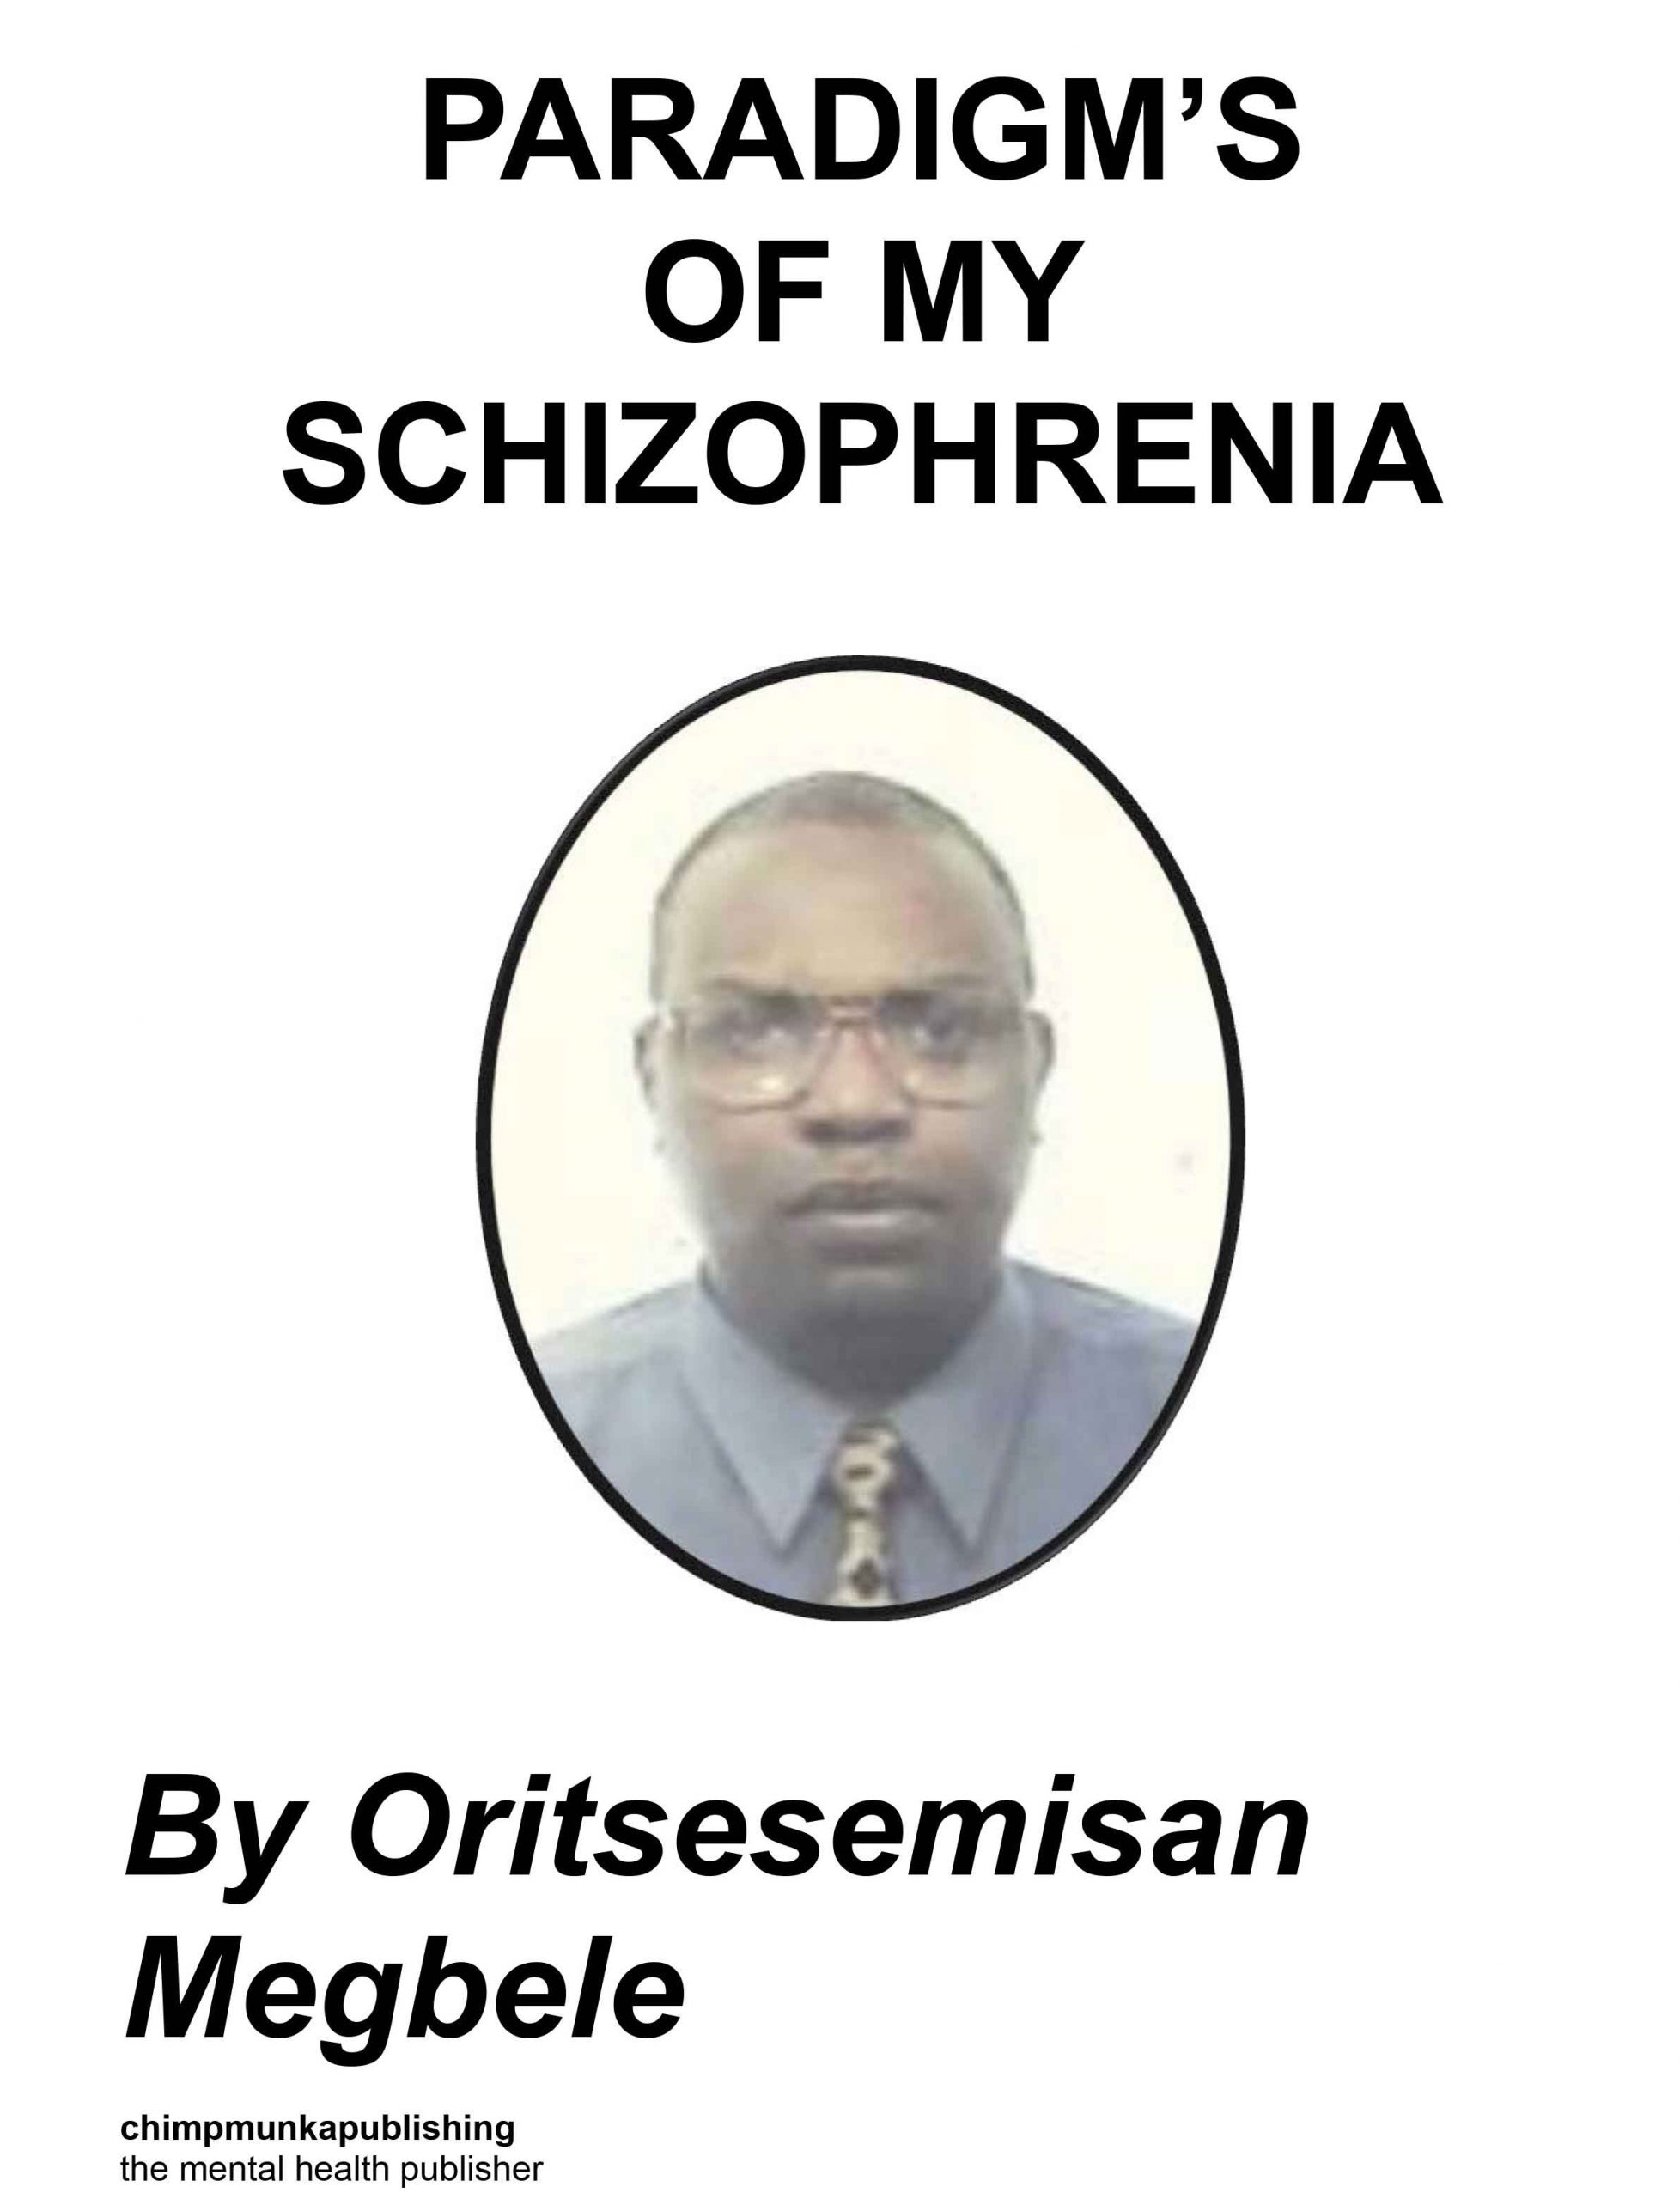 Paradigm's of my schizophrenia